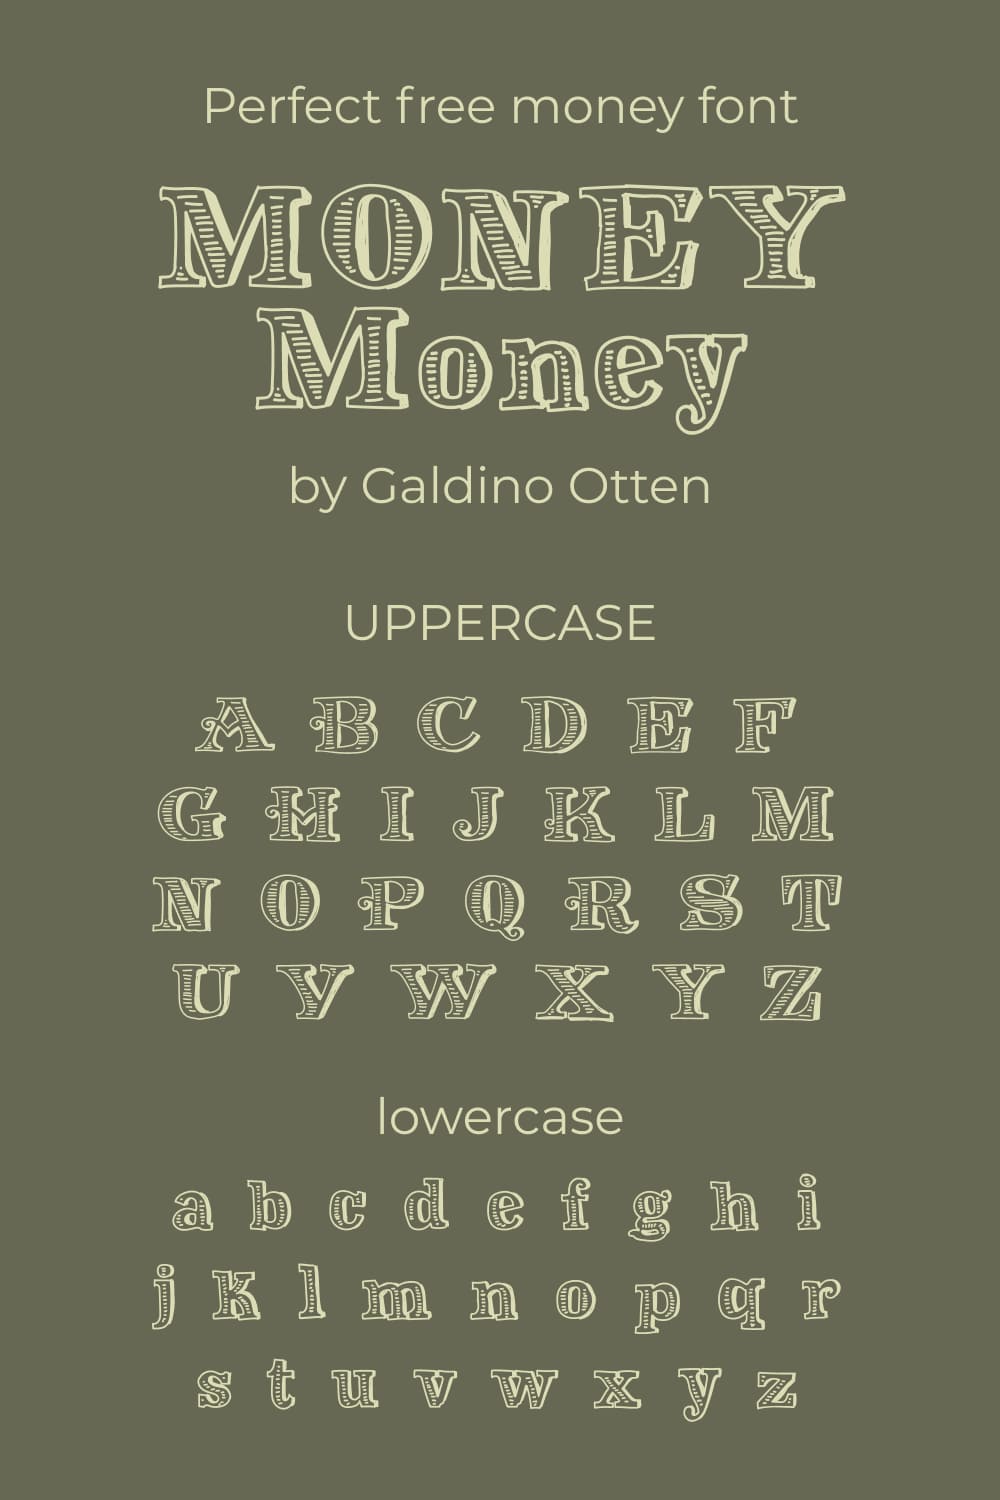 MasterBundles Alphabet example image with free money font for Pinterest.